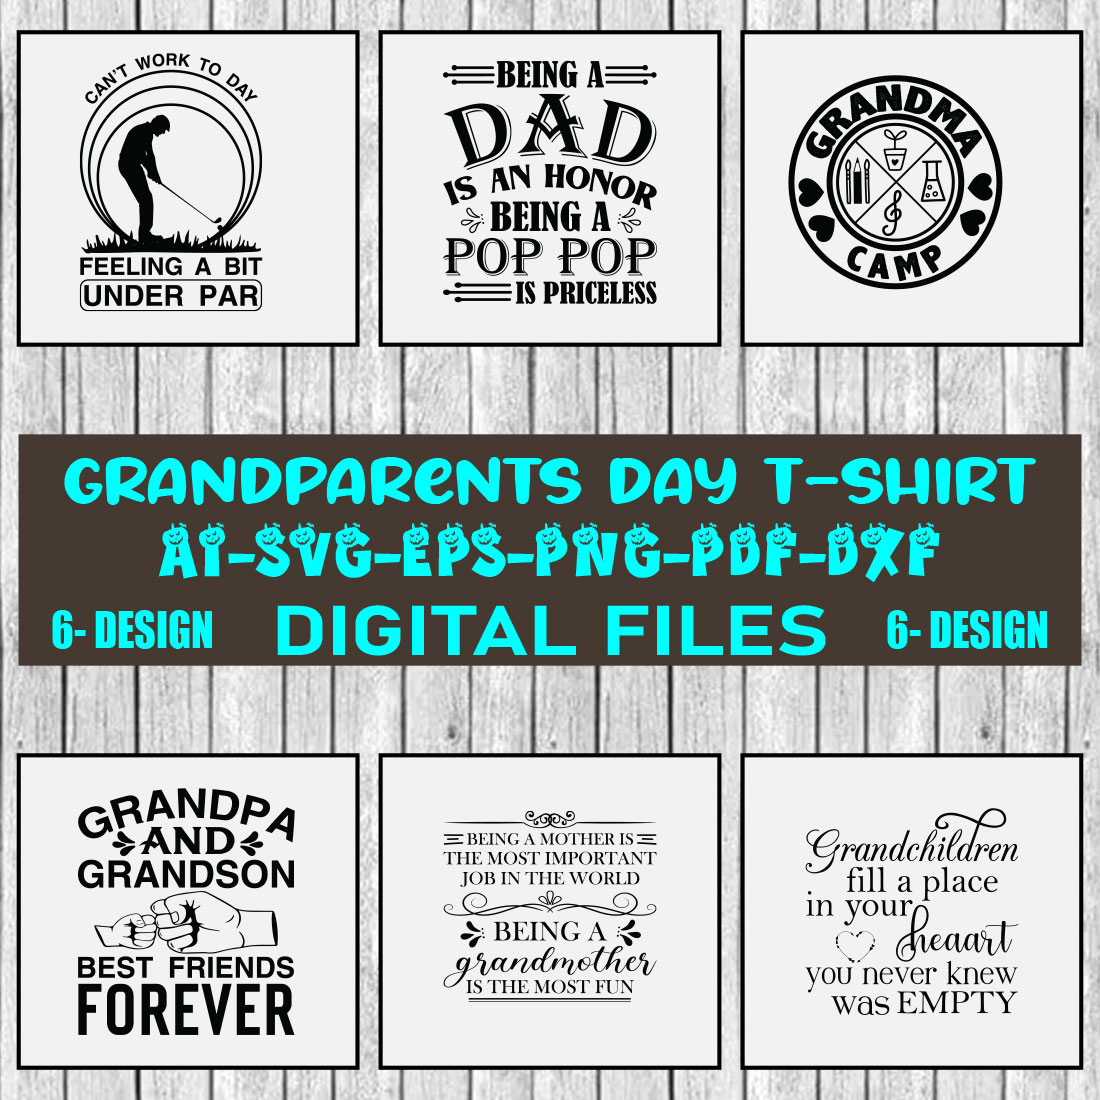 Grandparents Day T-shirt Design Bundle Vol-1 cover image.